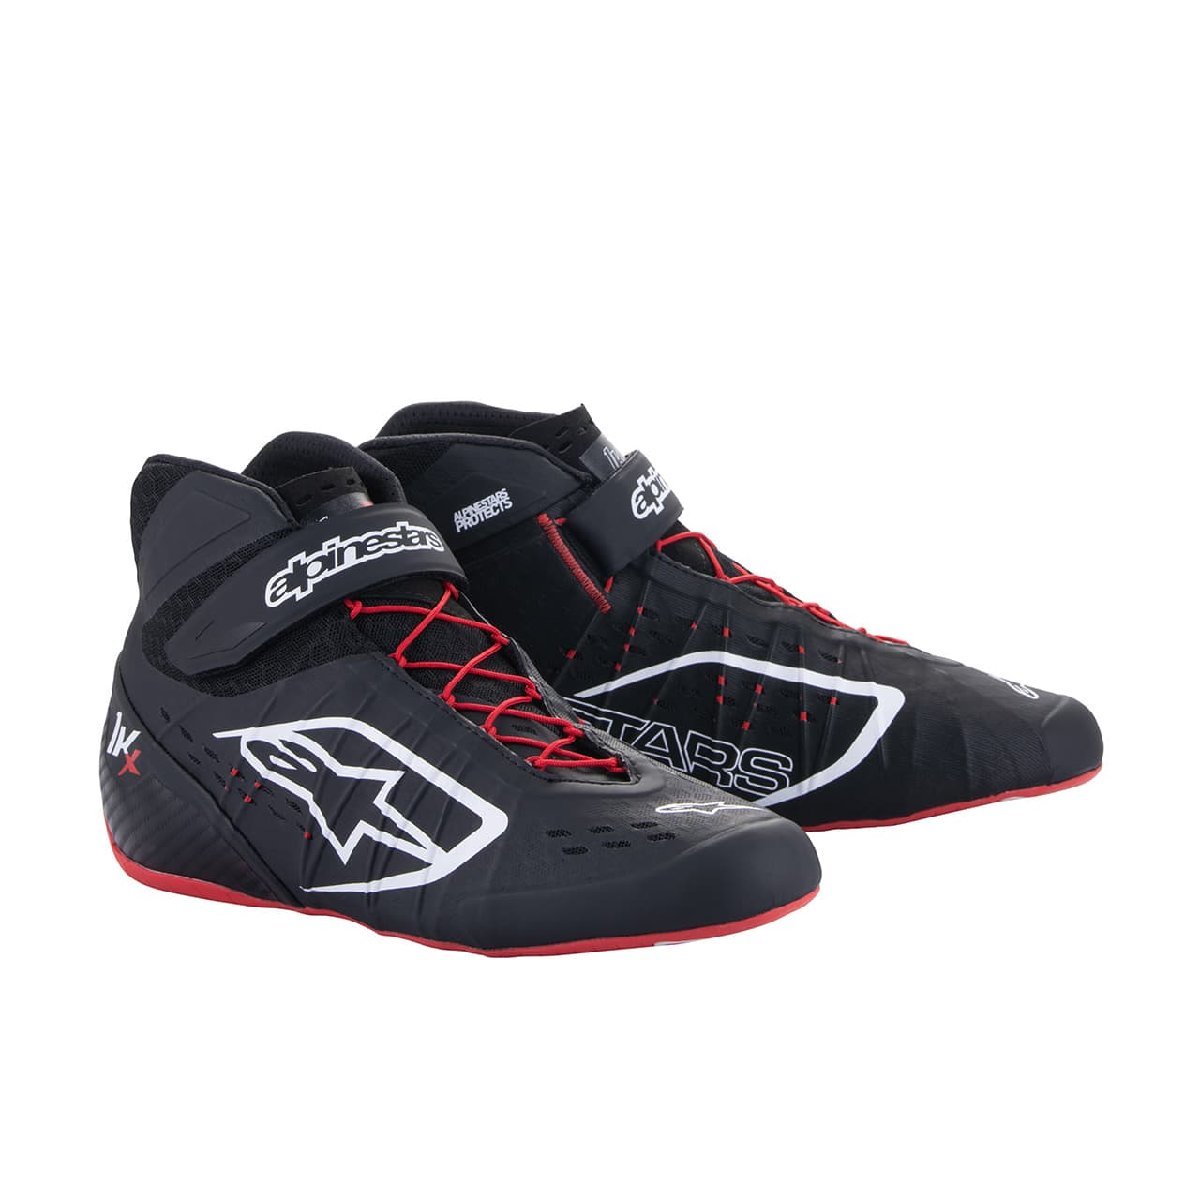 alpinestars( Alpine Stars ) Cart shoes TECH-1 KX V2 SHOES ( size USD: 7.5) 123 BLACK WHITE RED